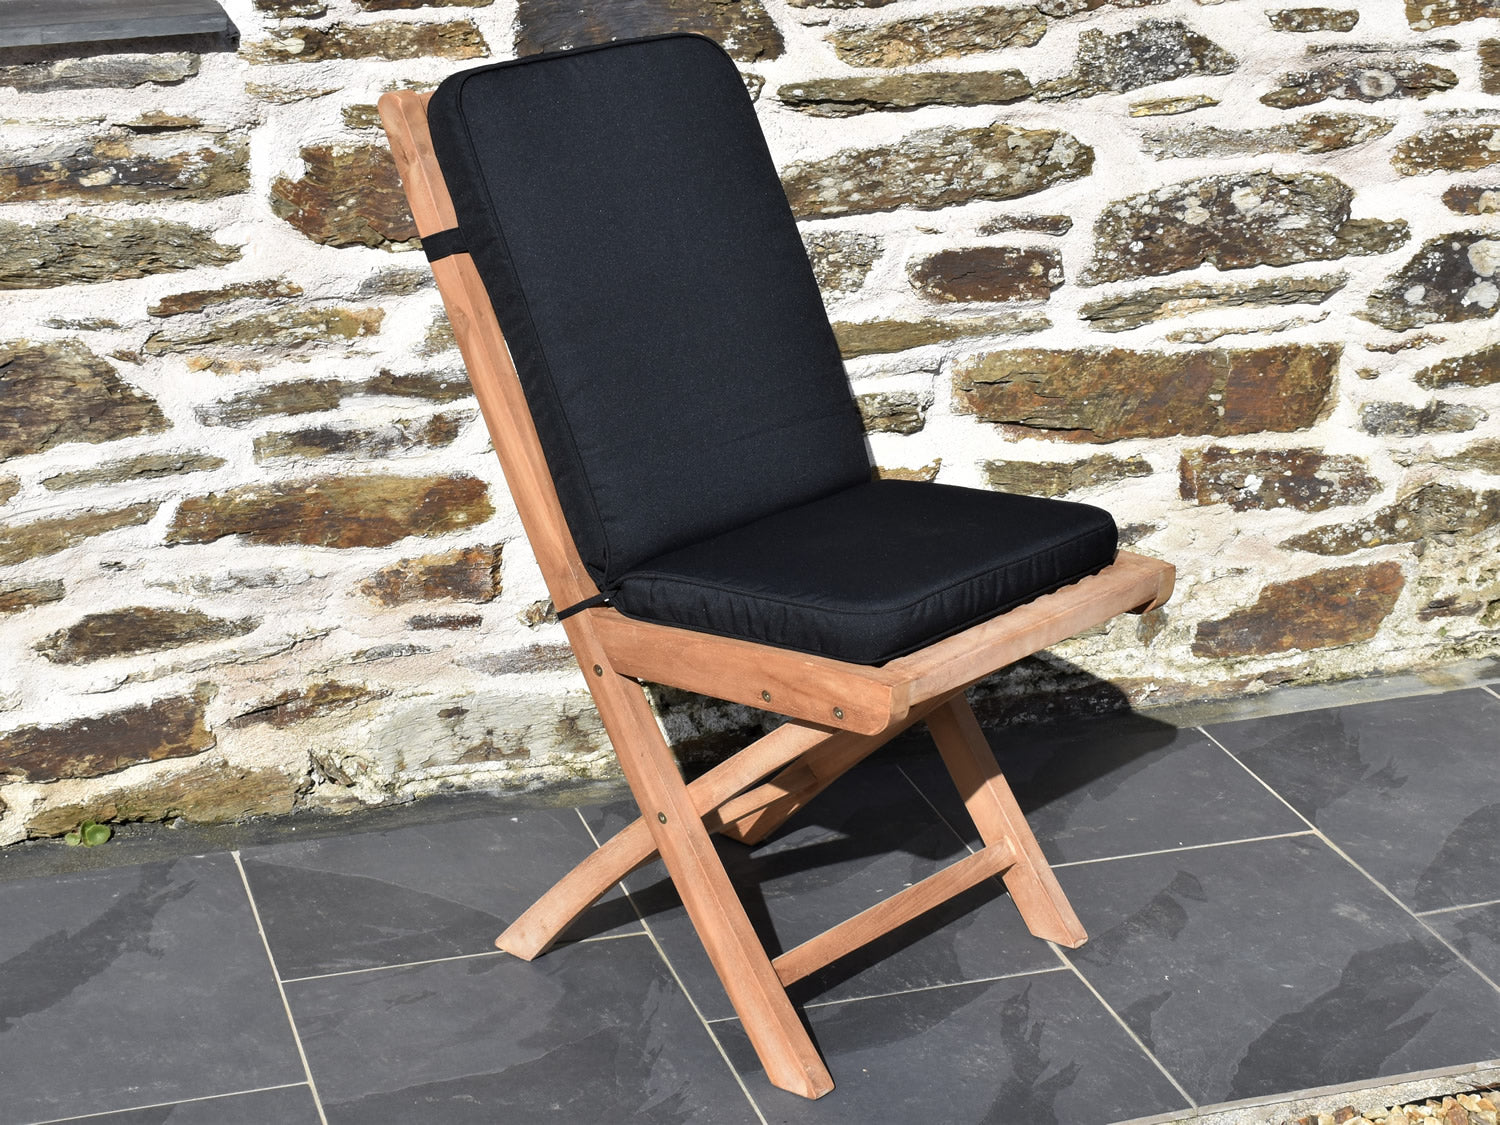 Classic black garden folding seat pad and back cushion, prefect for folding teak garden chairs